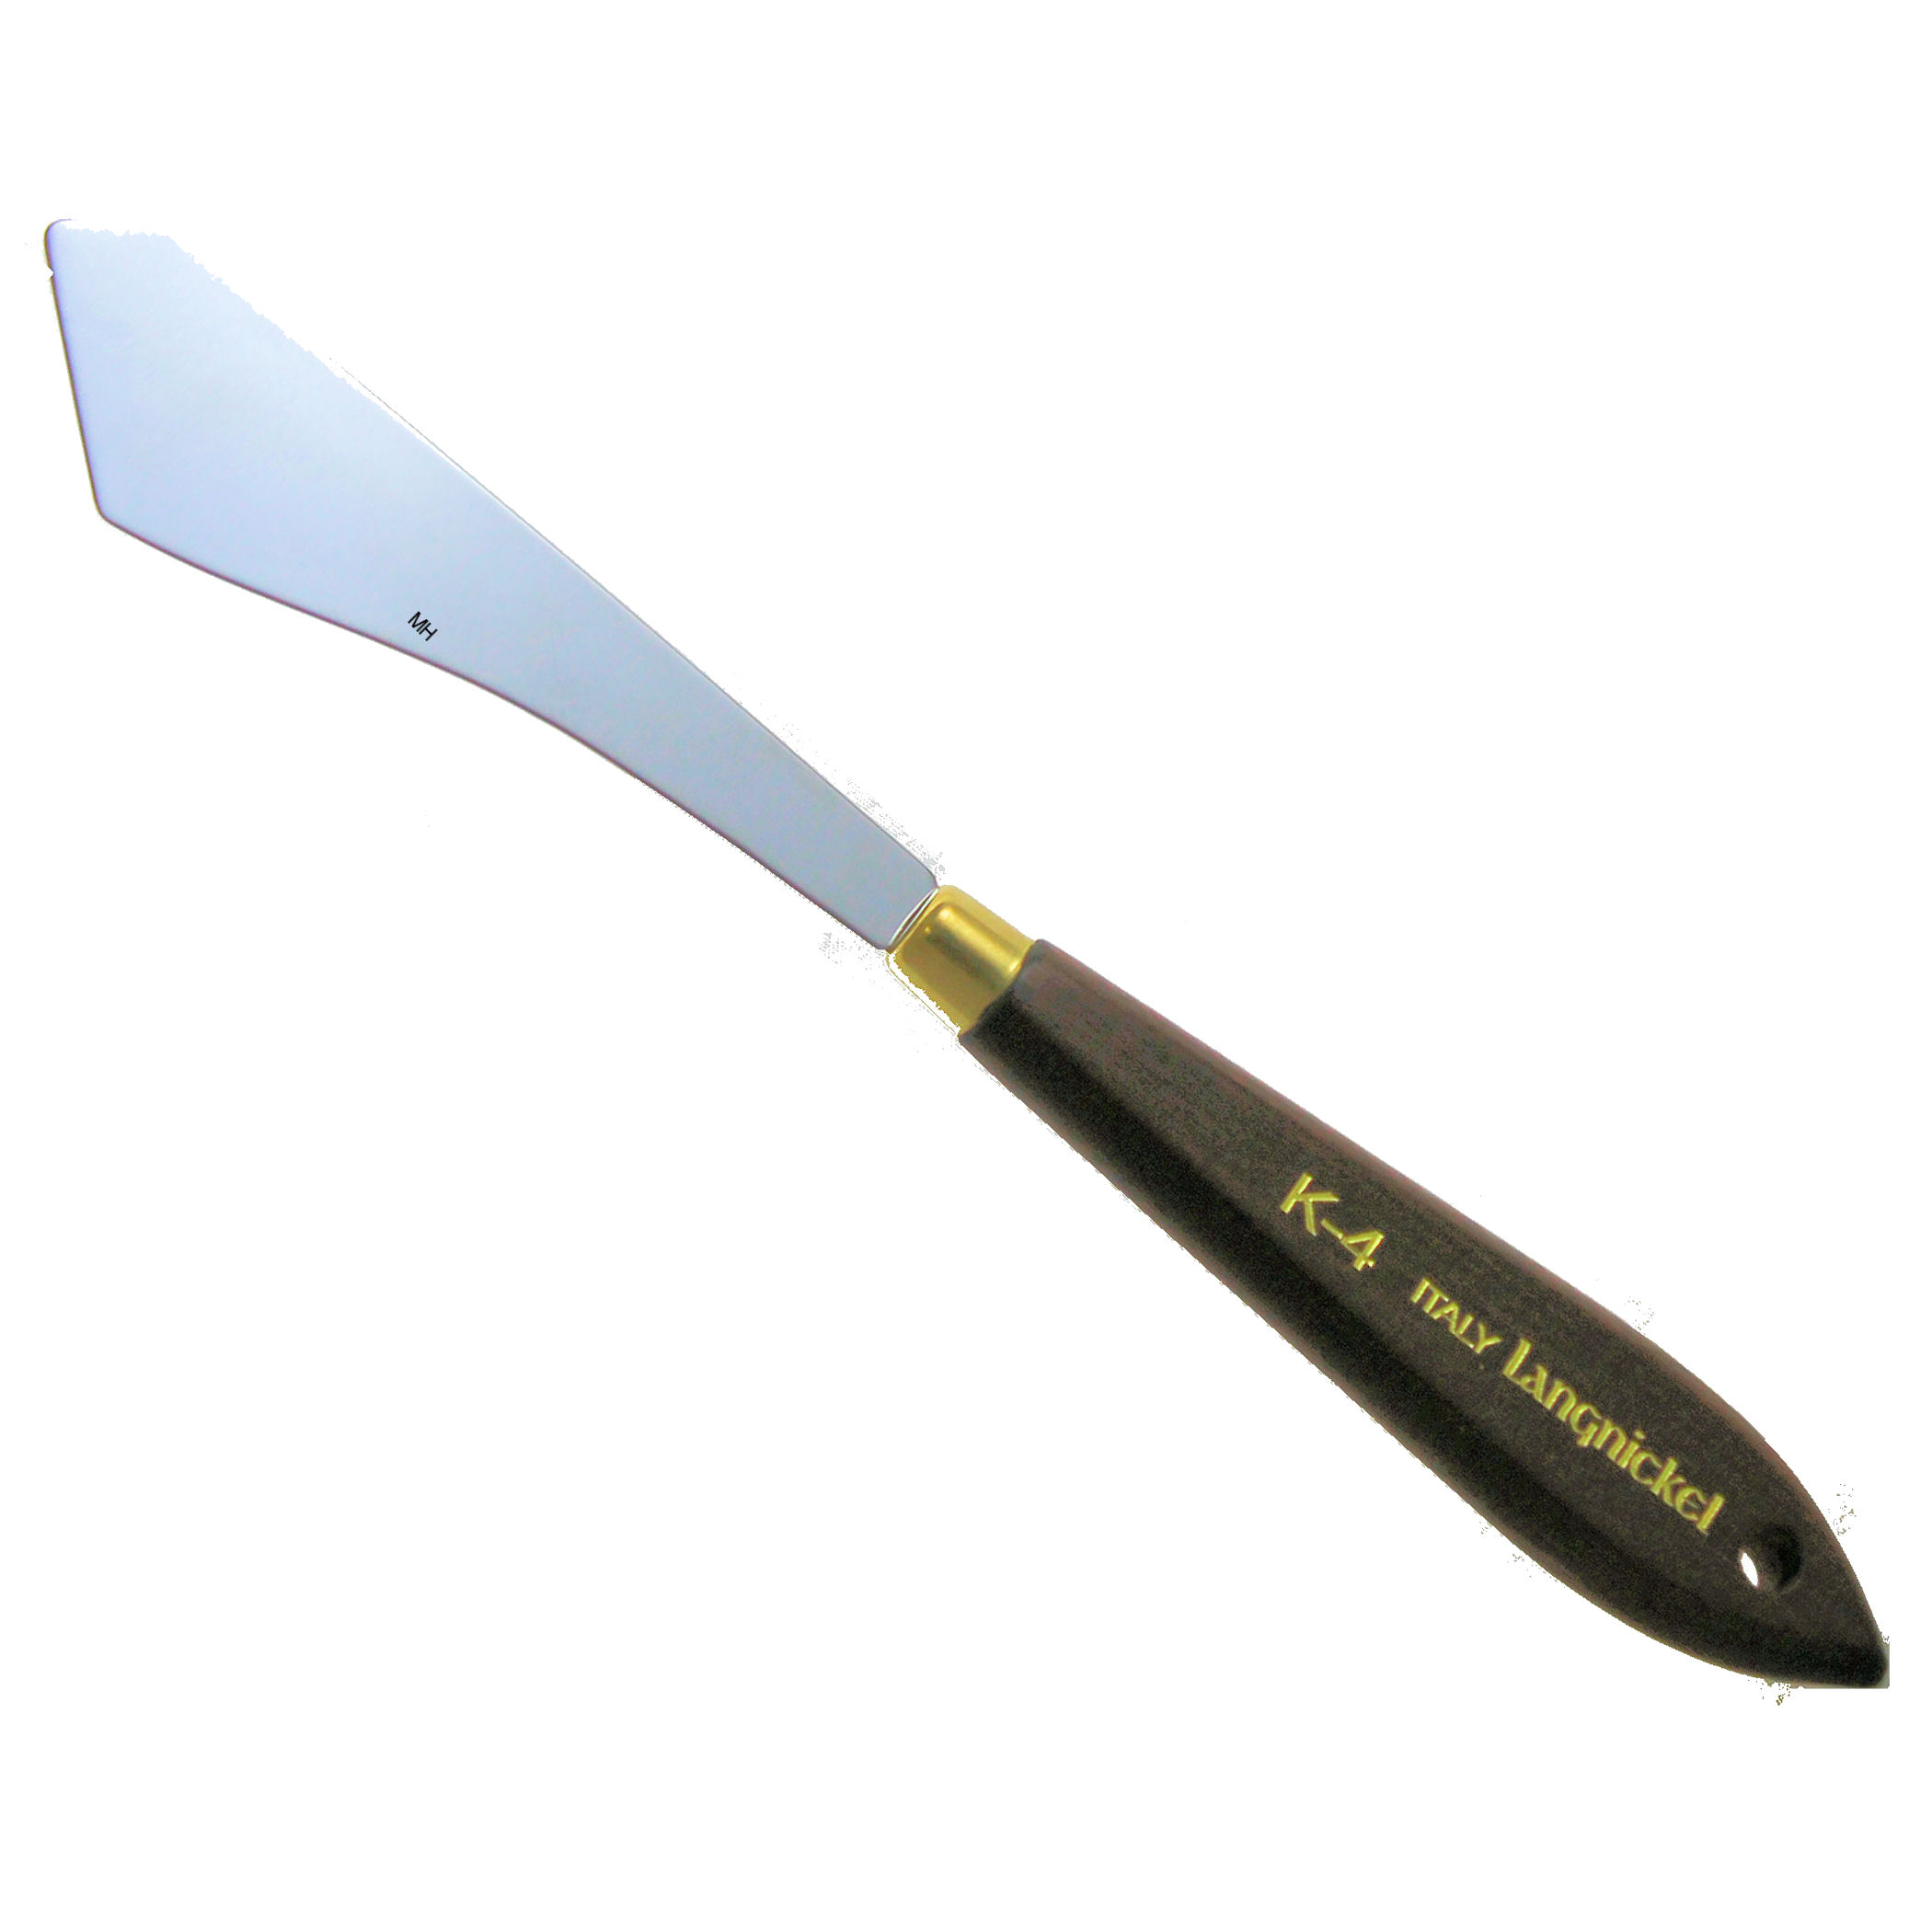 palette knife bob